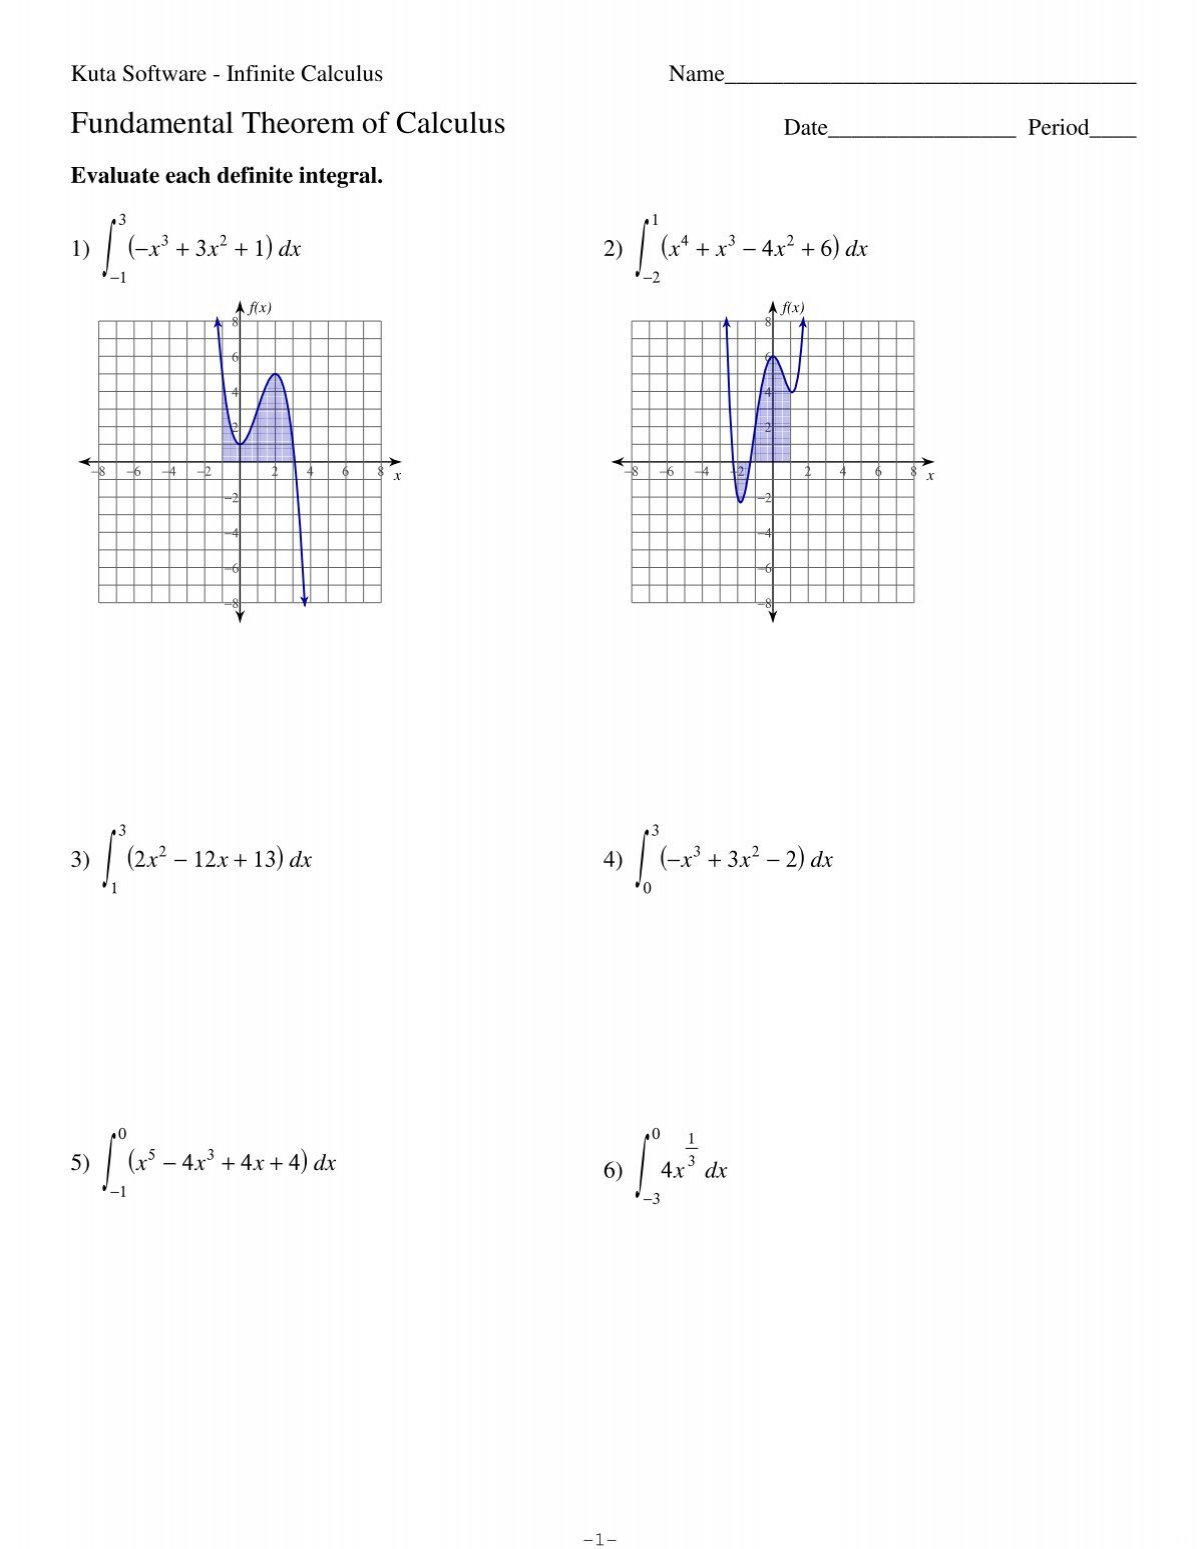 First Fundamental Theorem Of Calculus - Kuta Software